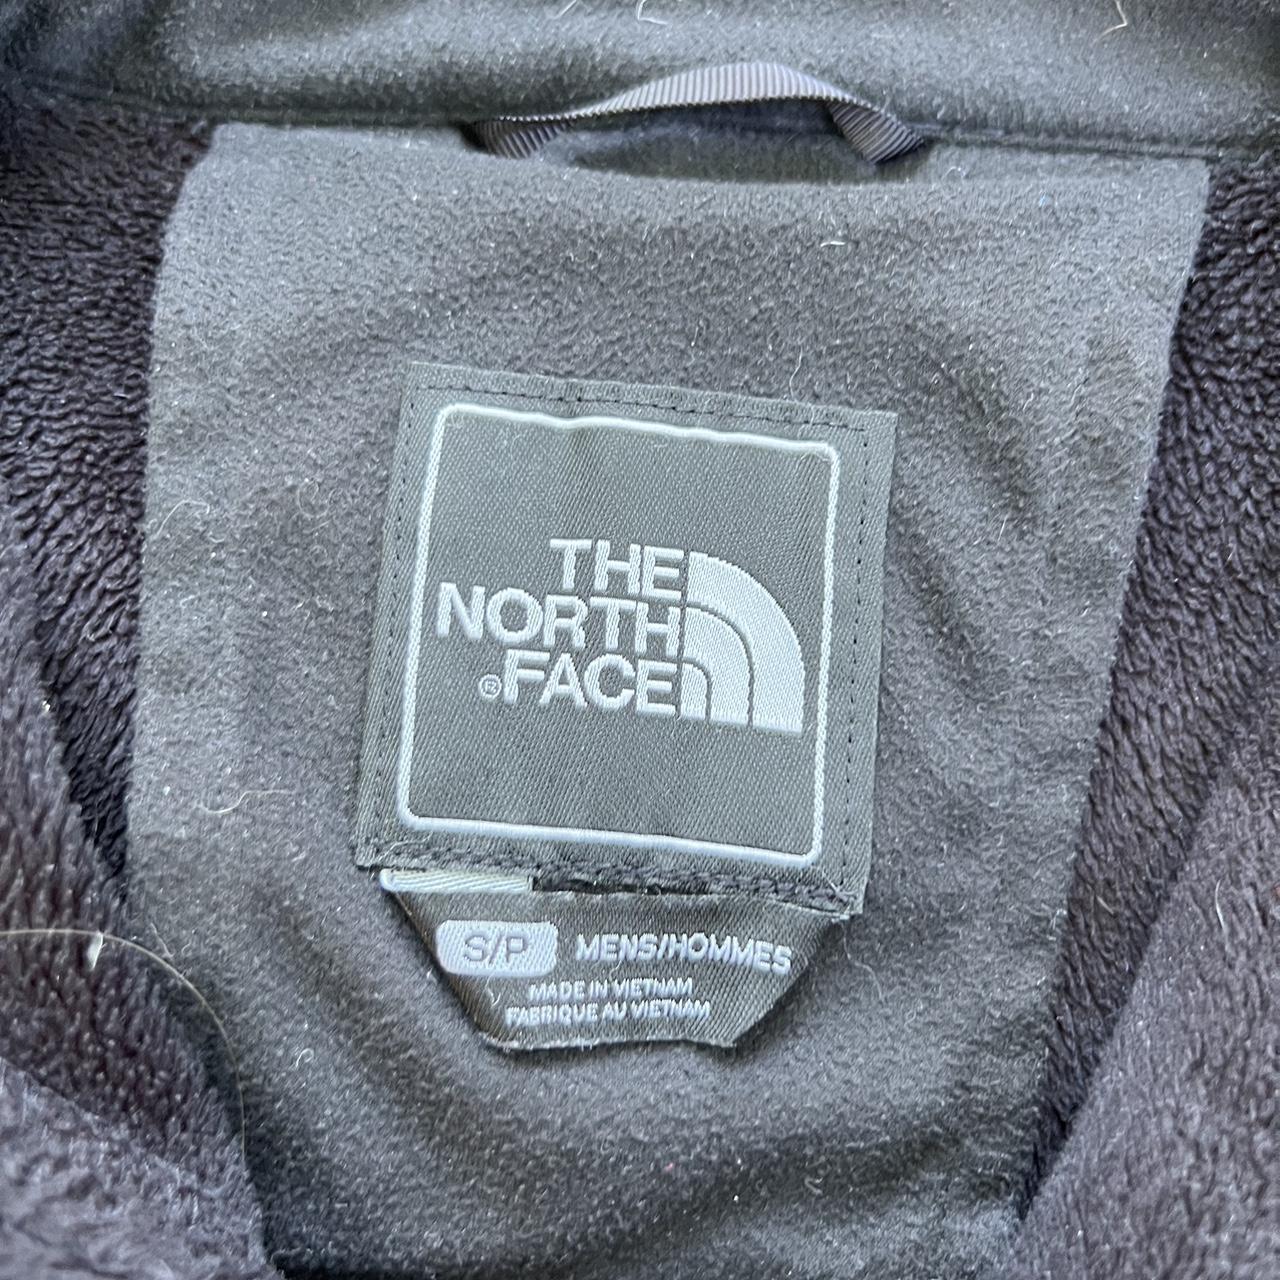 The North Face Men's Black Jacket (2)